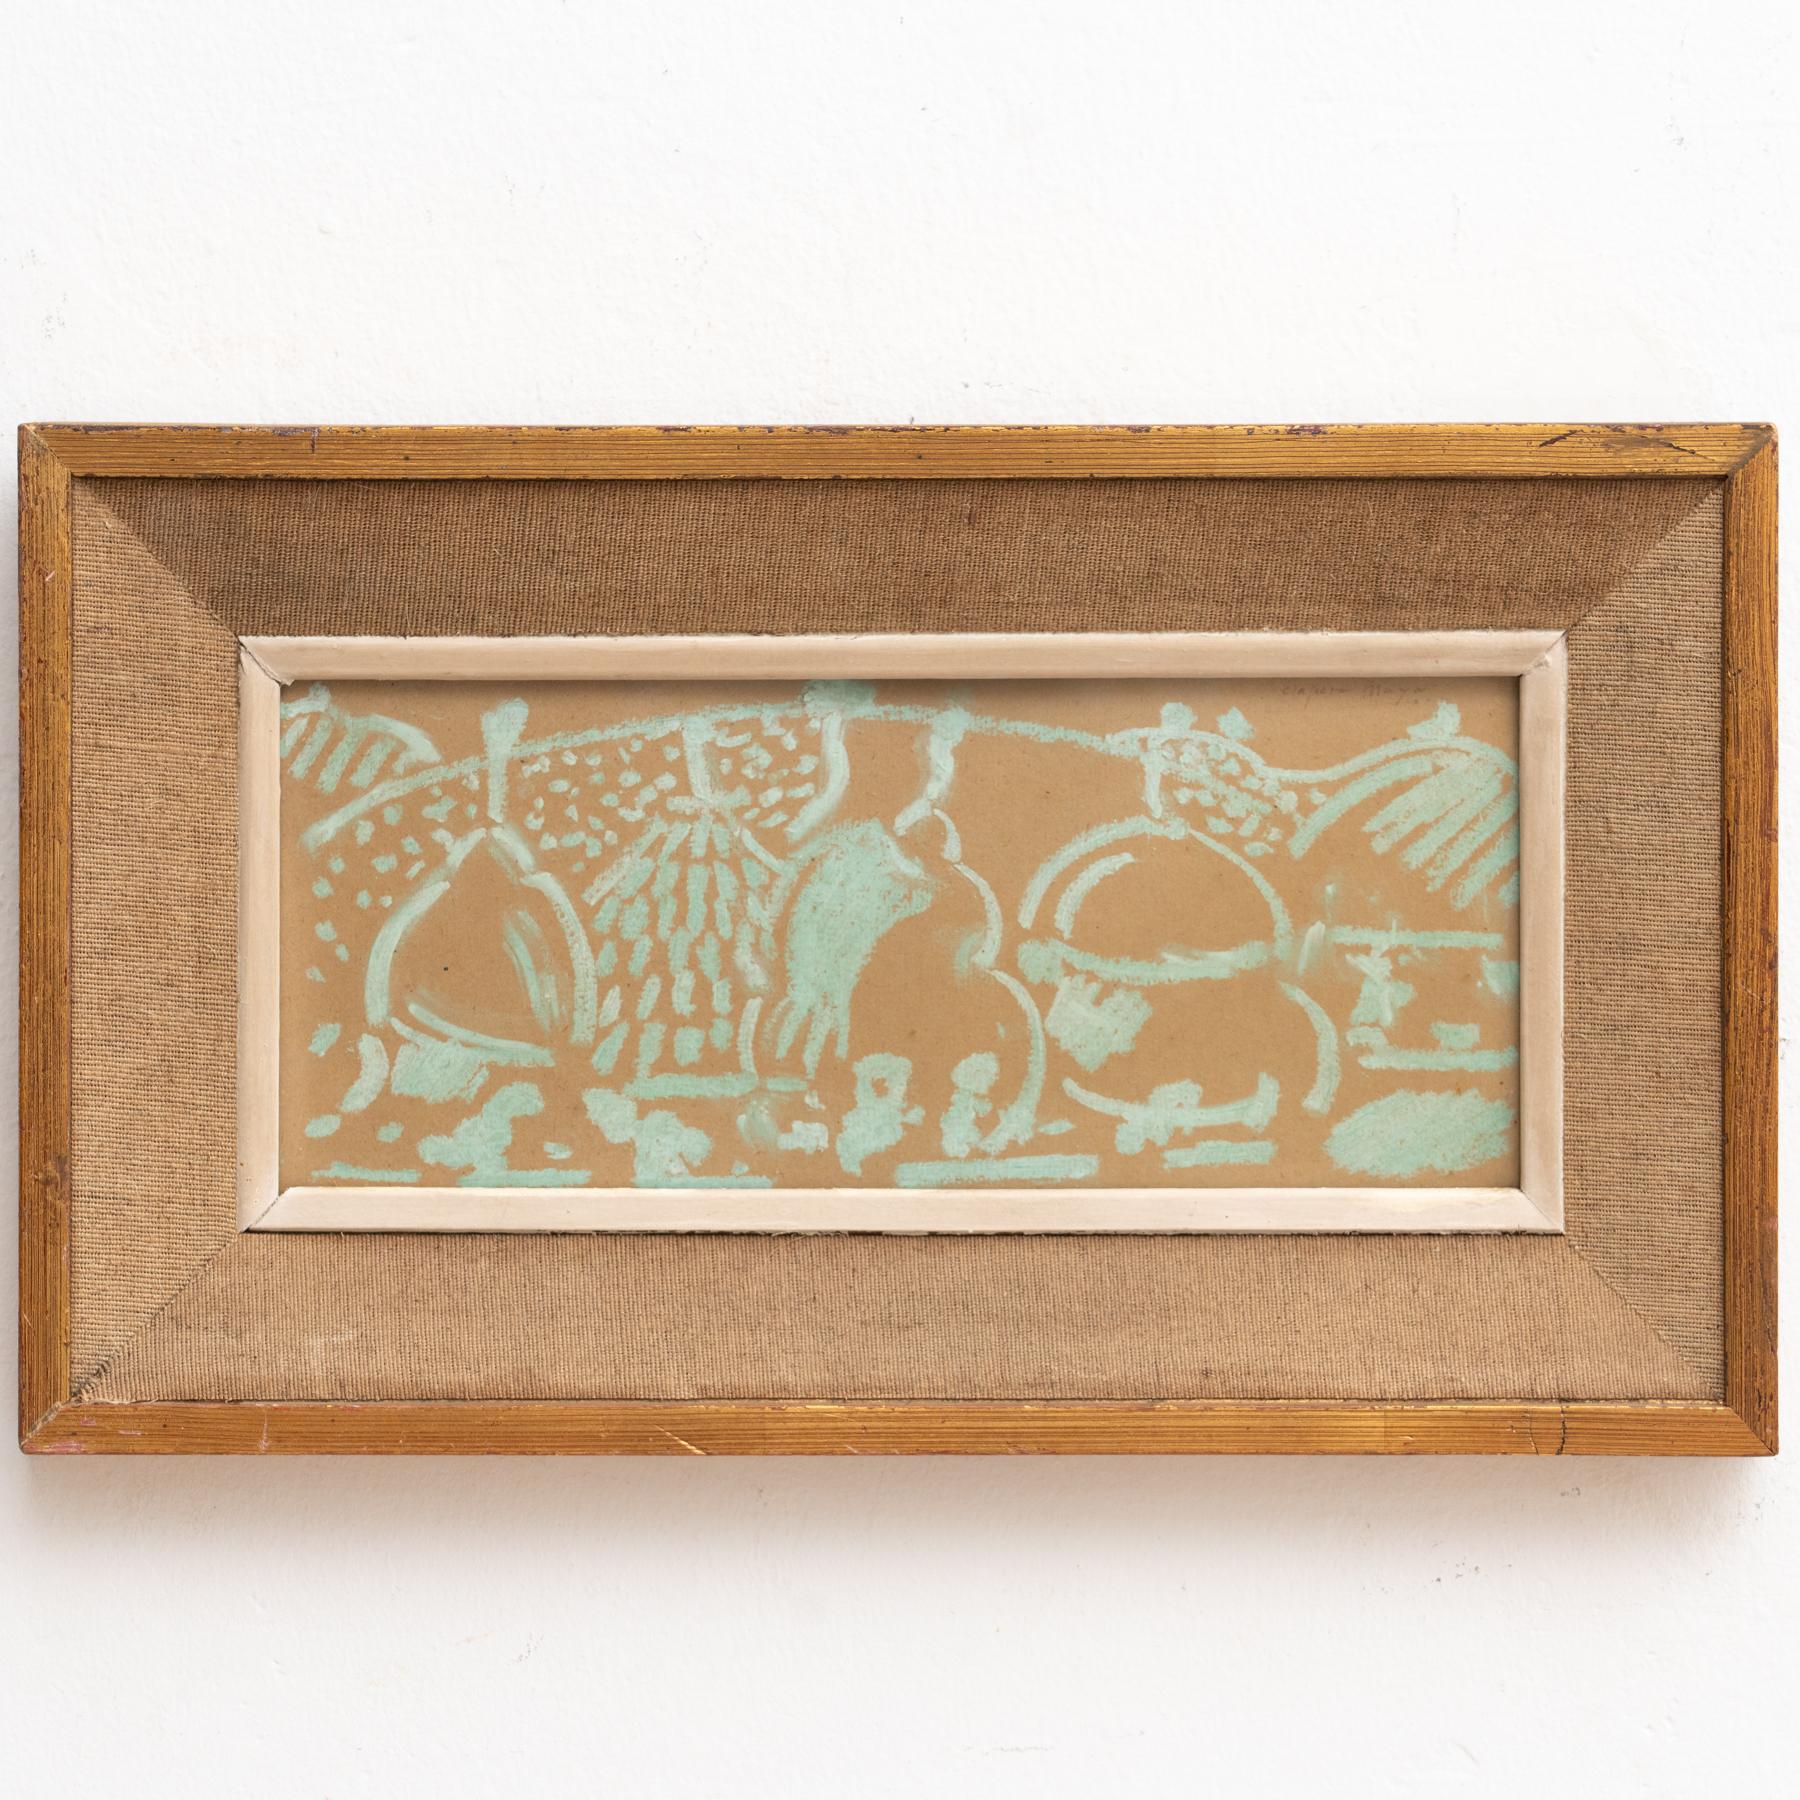 Wood Clapera Maya Framed Artwork from Spain, circa 1950 For Sale